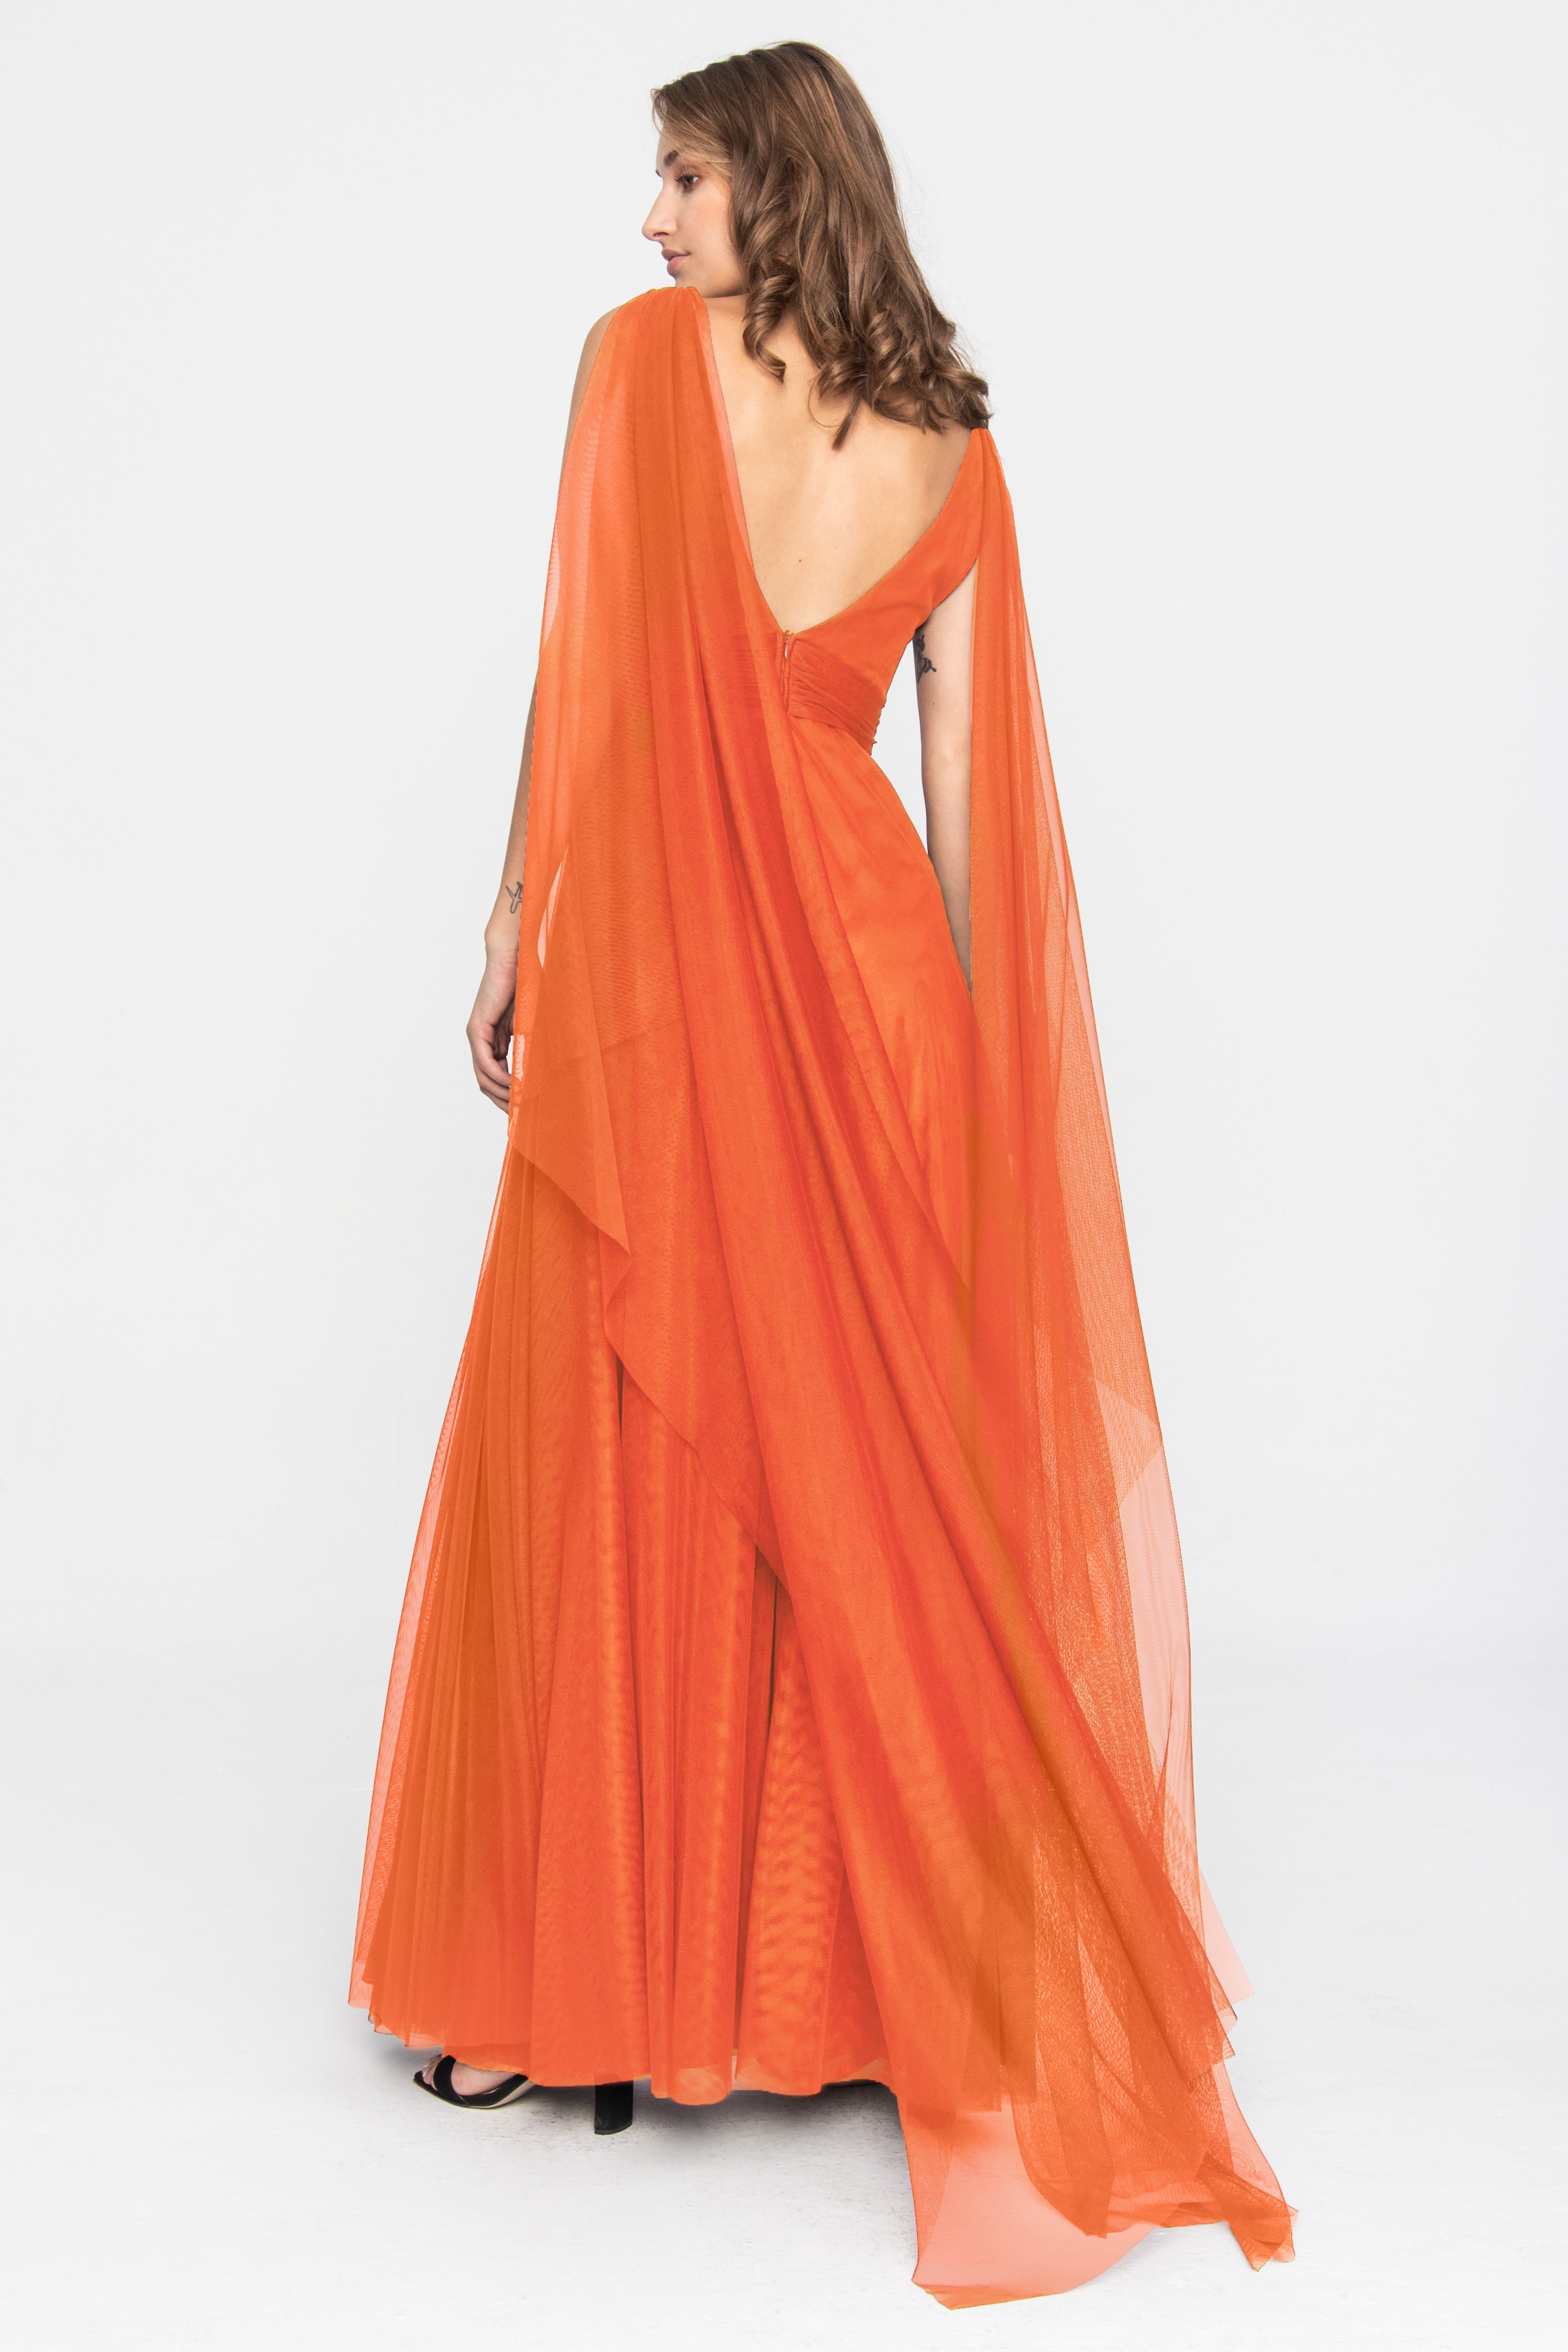 Tulle Terracotta Evening Gown Orange